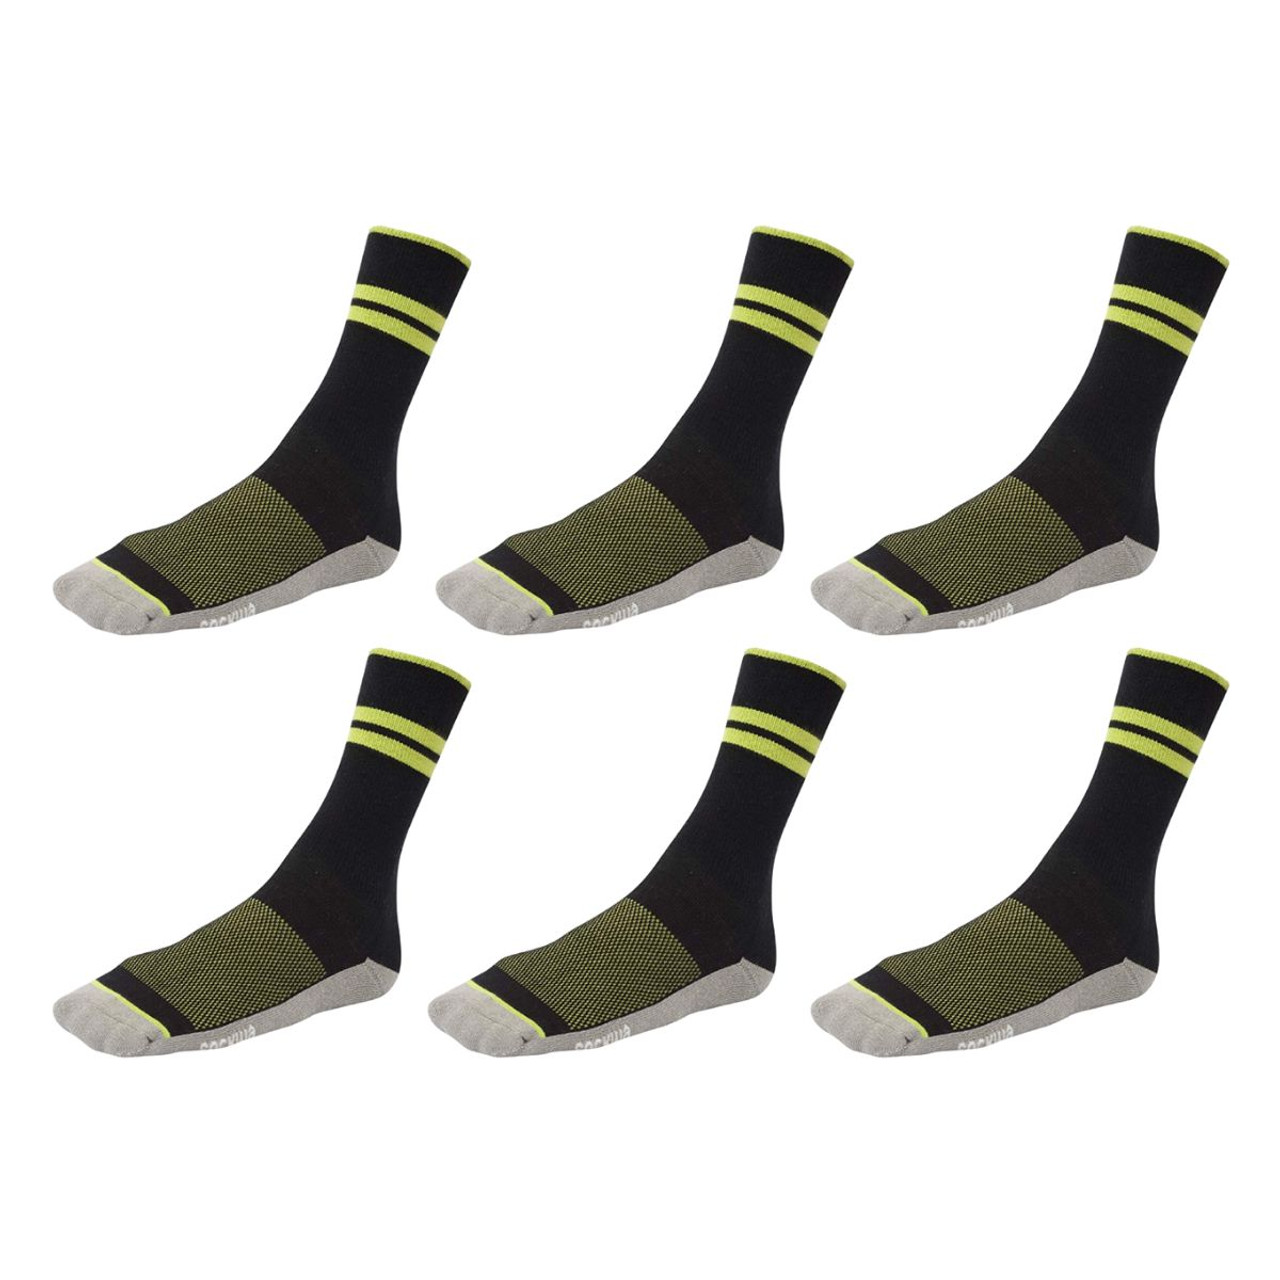 Sockwa Bamboo Athletic Charcoal Crew Sock - 6 Pack product image